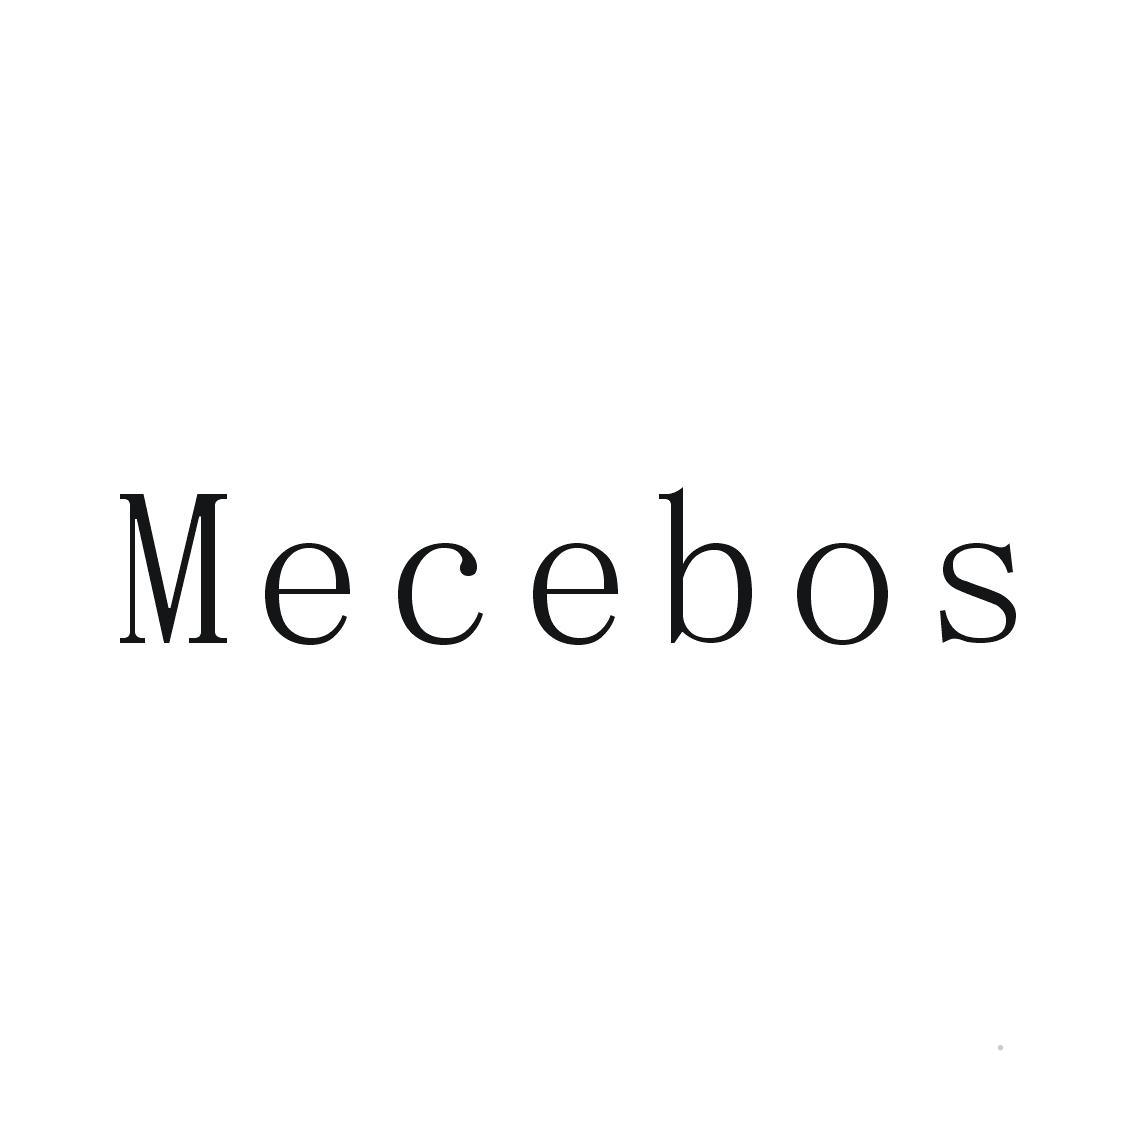 MECEBOS